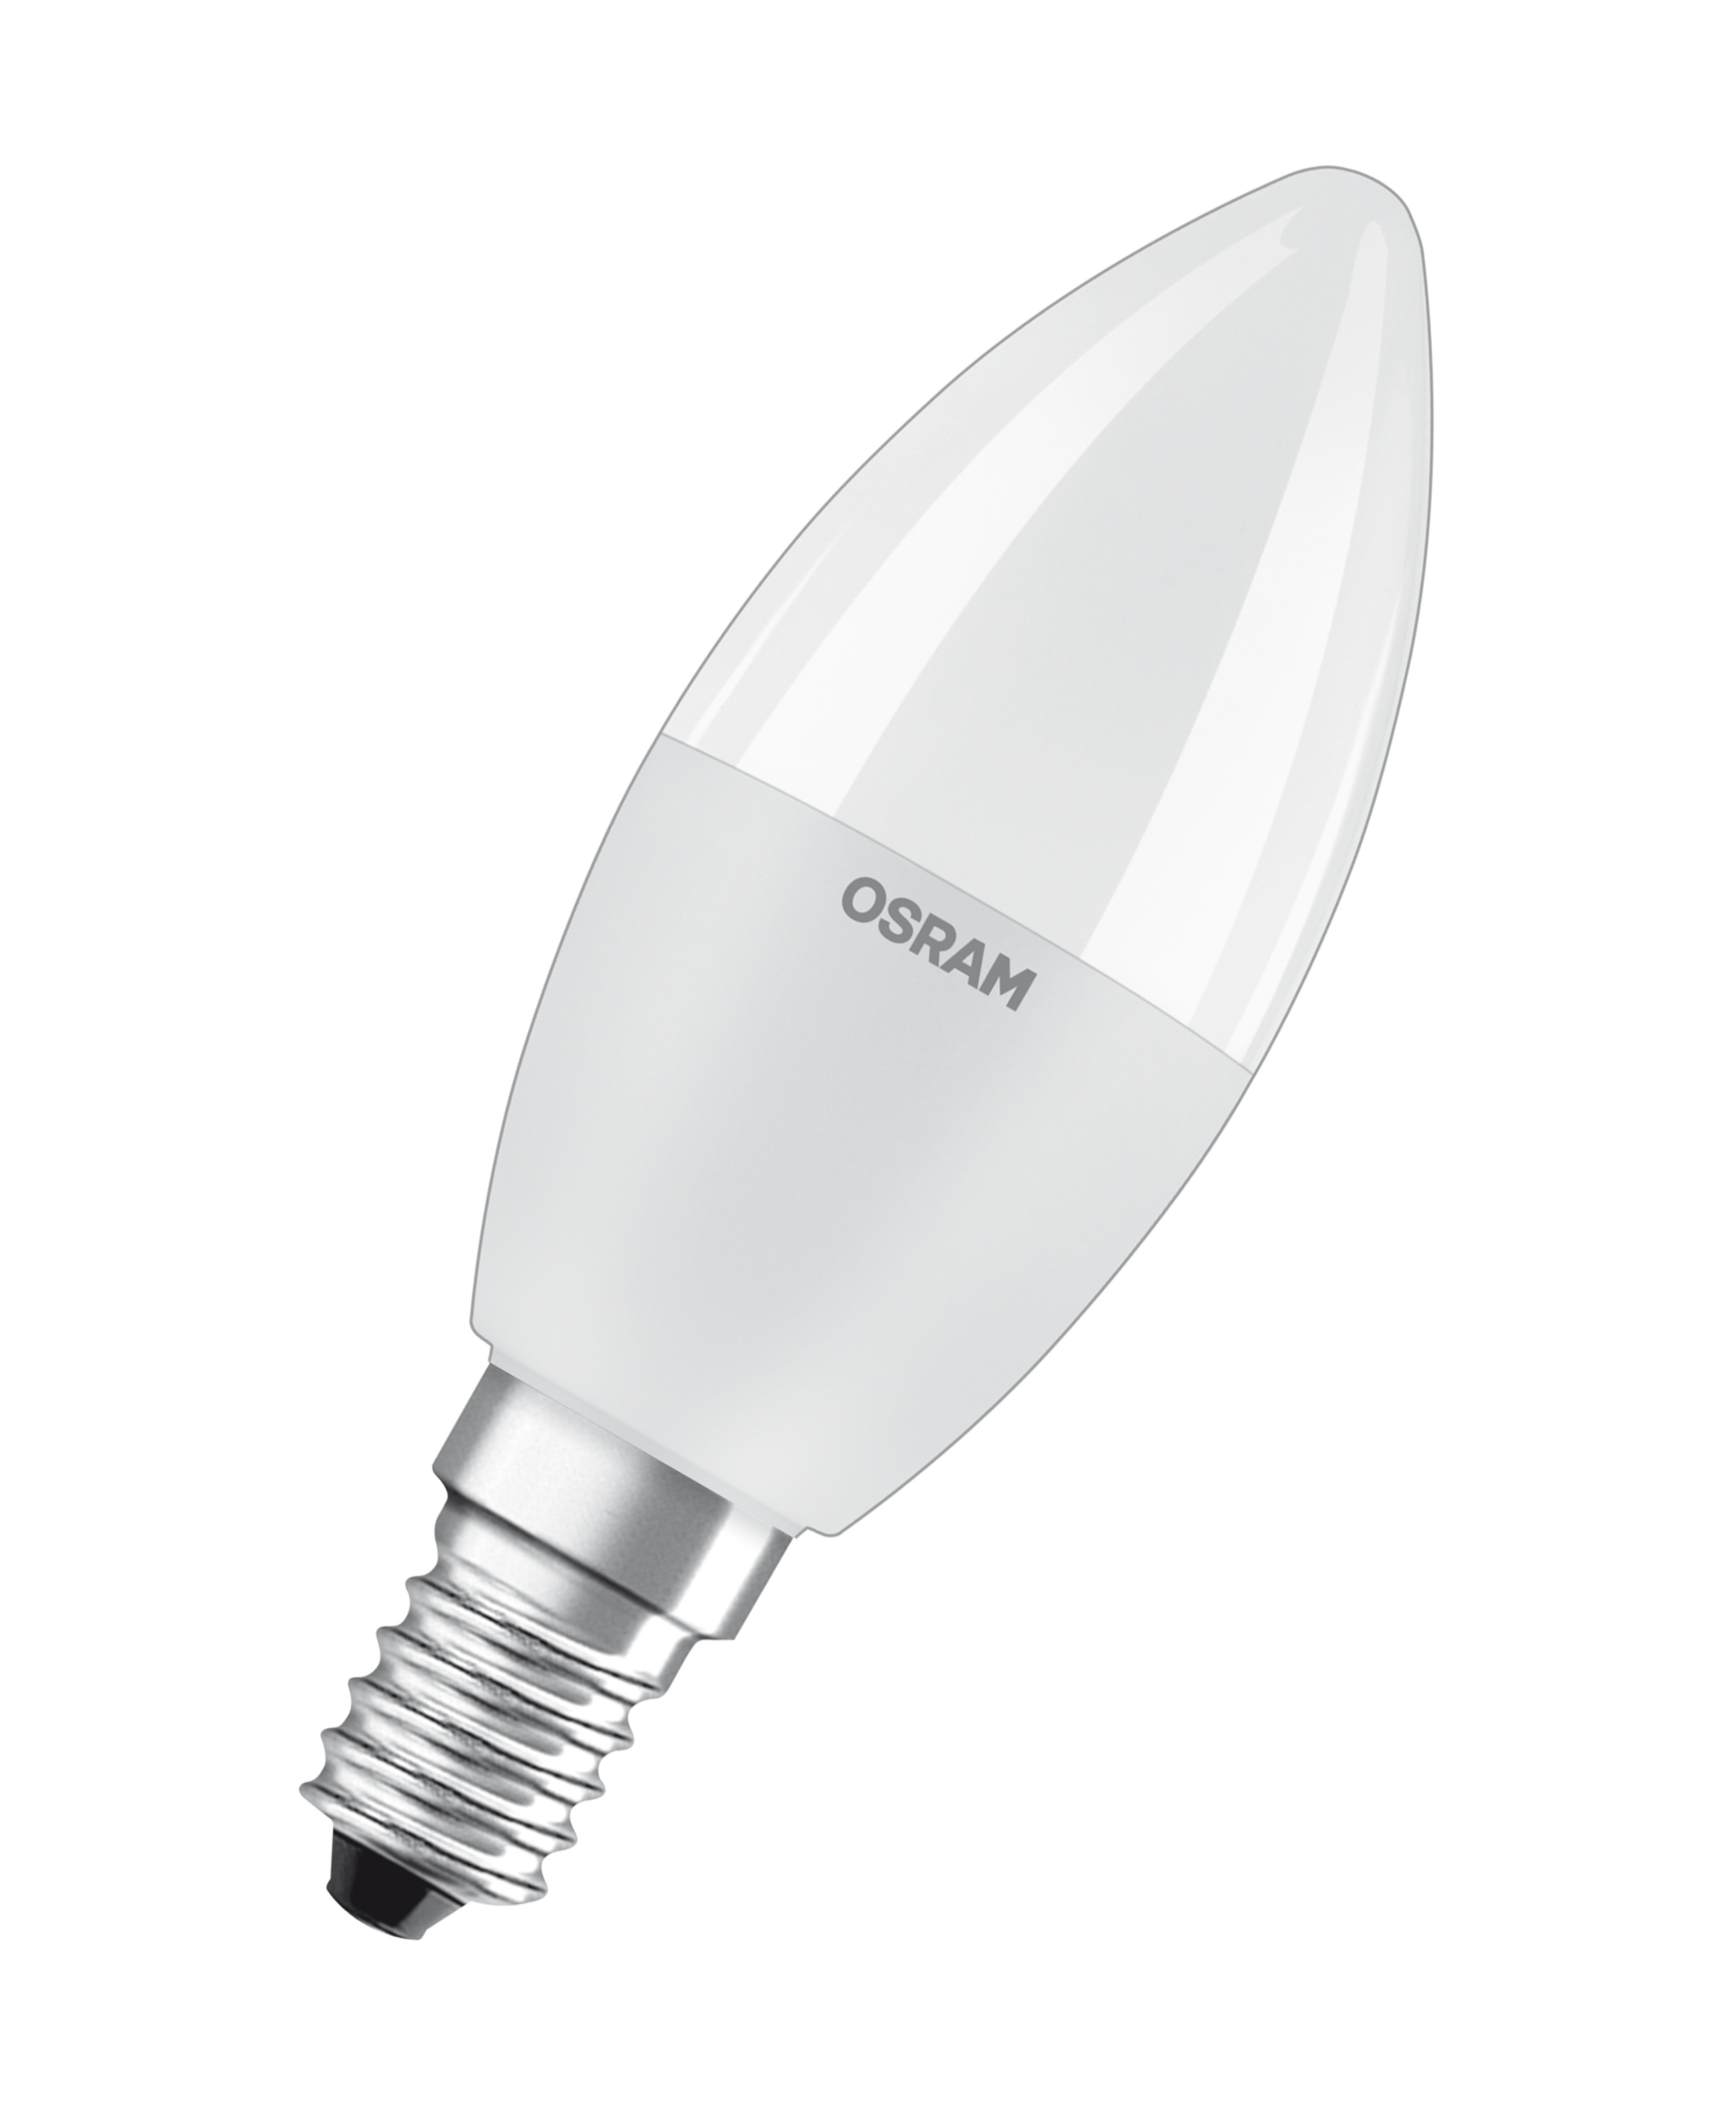 LED LED remote lumen 470 with RGBW OSRAM  Warmweiß Retrofit lamps control Lampe